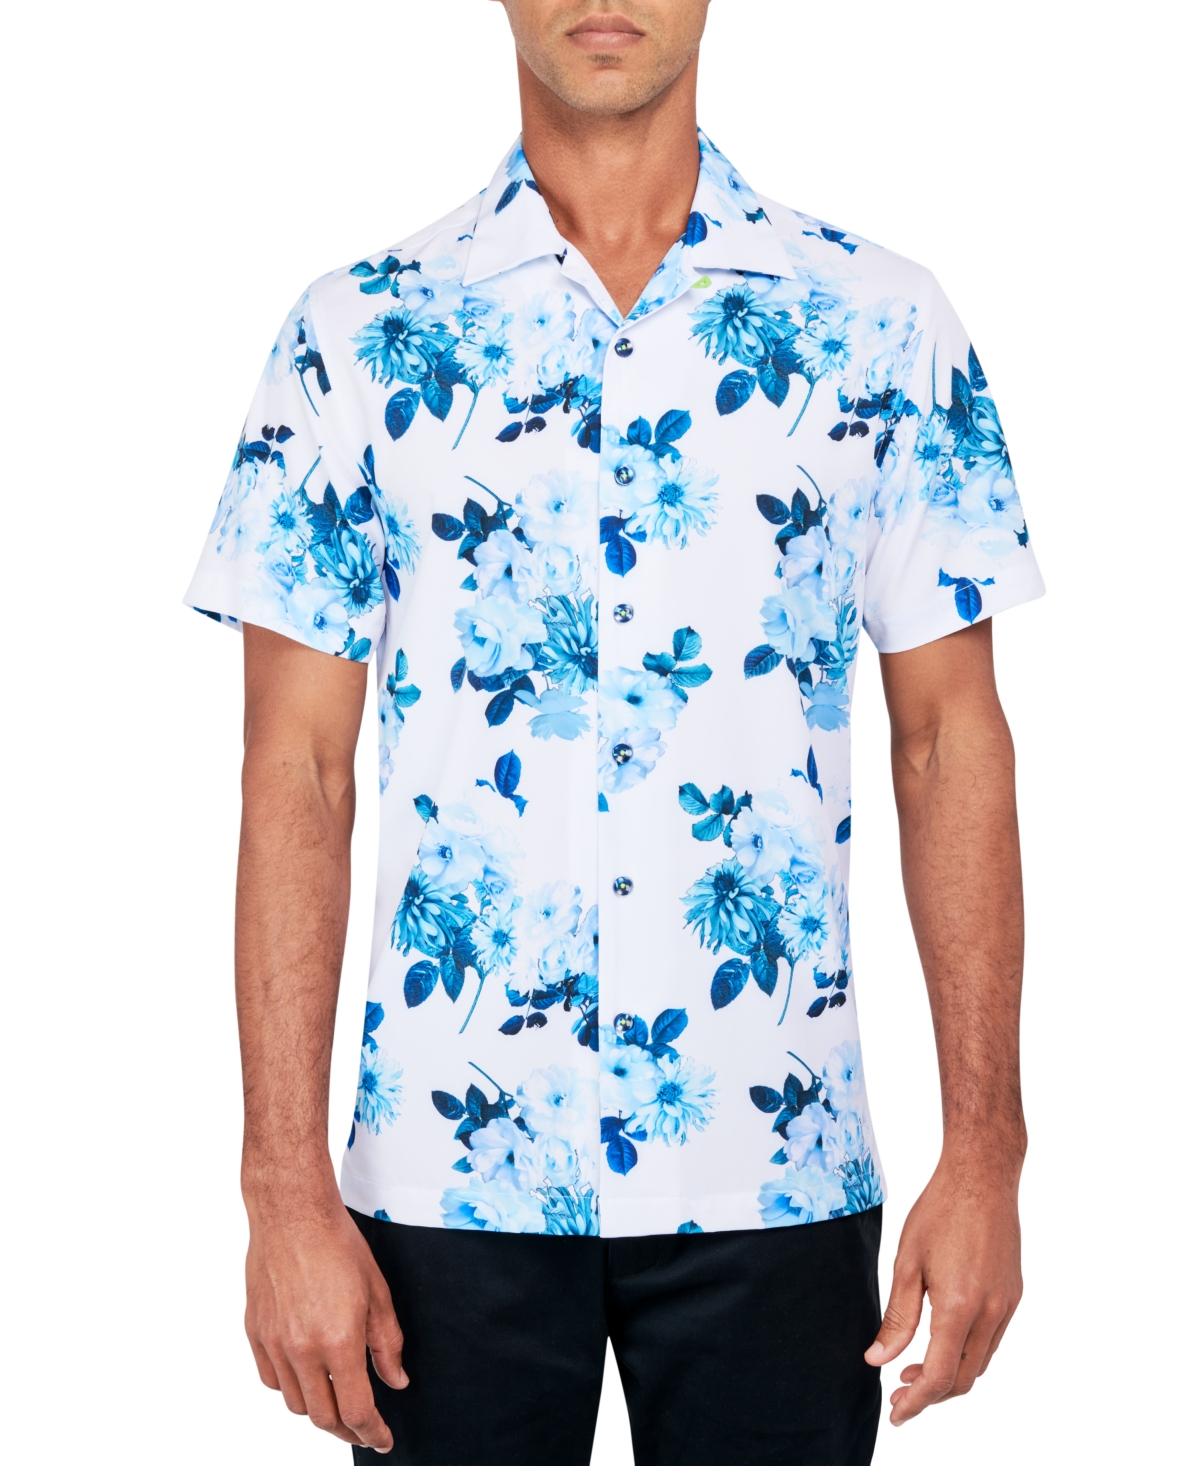 Men's Regular-Fit Non-Iron Performance Stretch Floral-Print Button-Down Camp Shirt - Blue